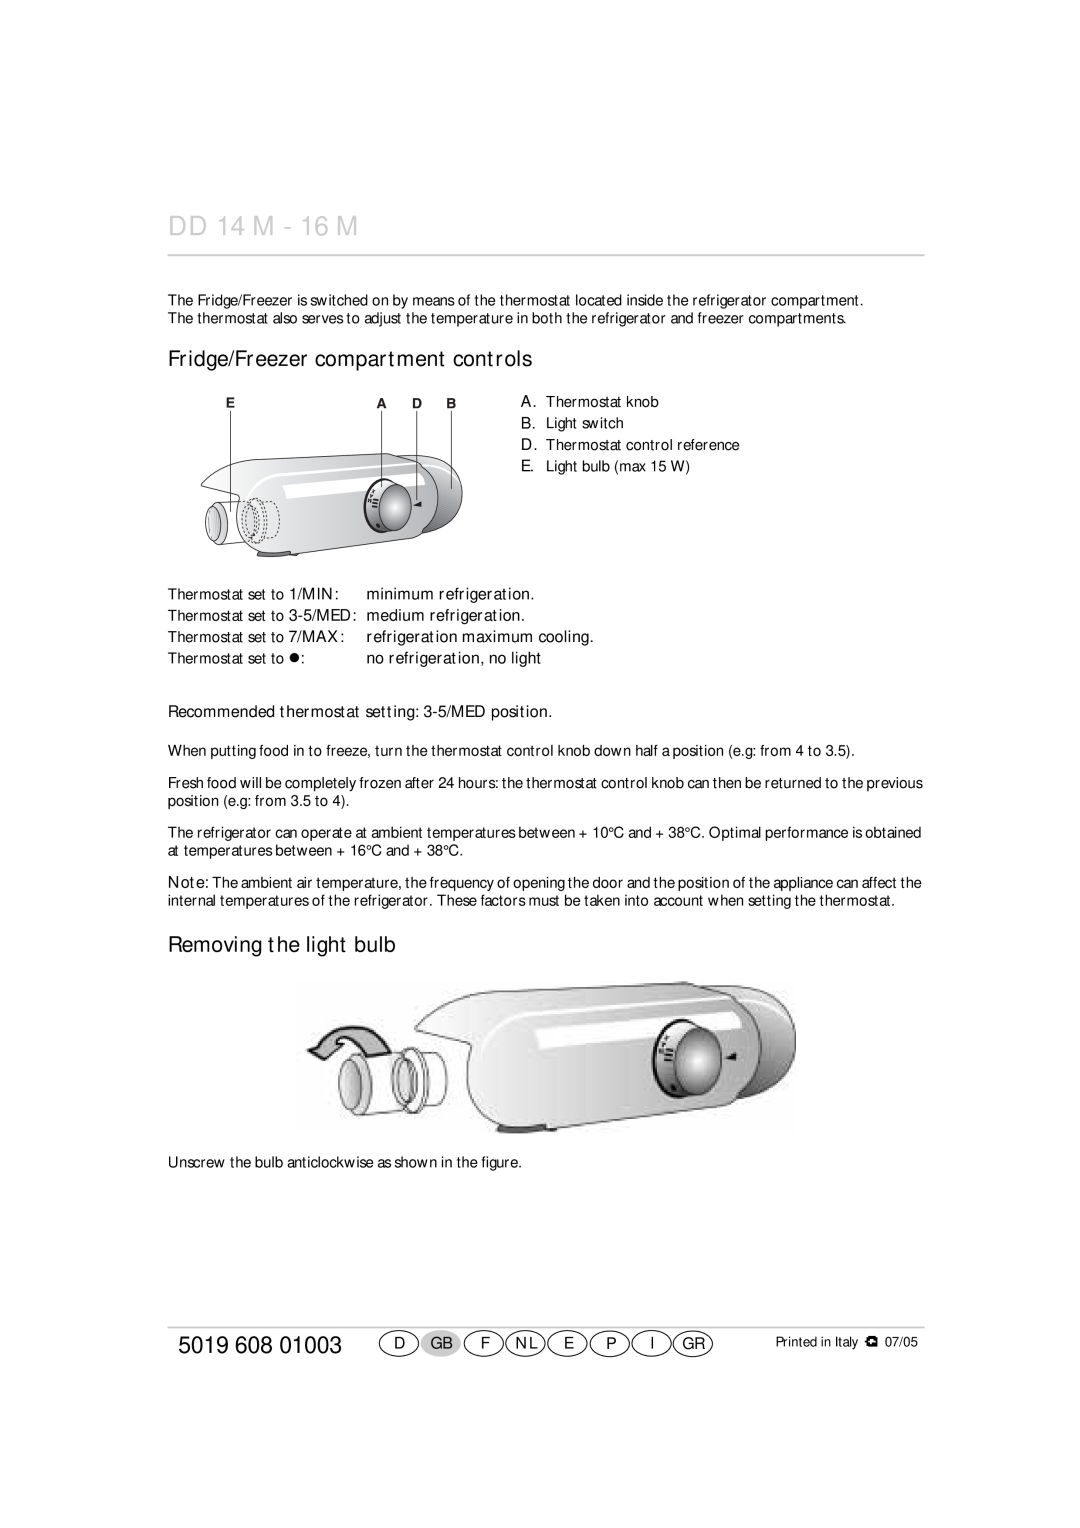 Smeg FR238A7 manual Fridge/Freezer compartment controls, Removing the light bulb, DD 14 M - 16 M, 5019 